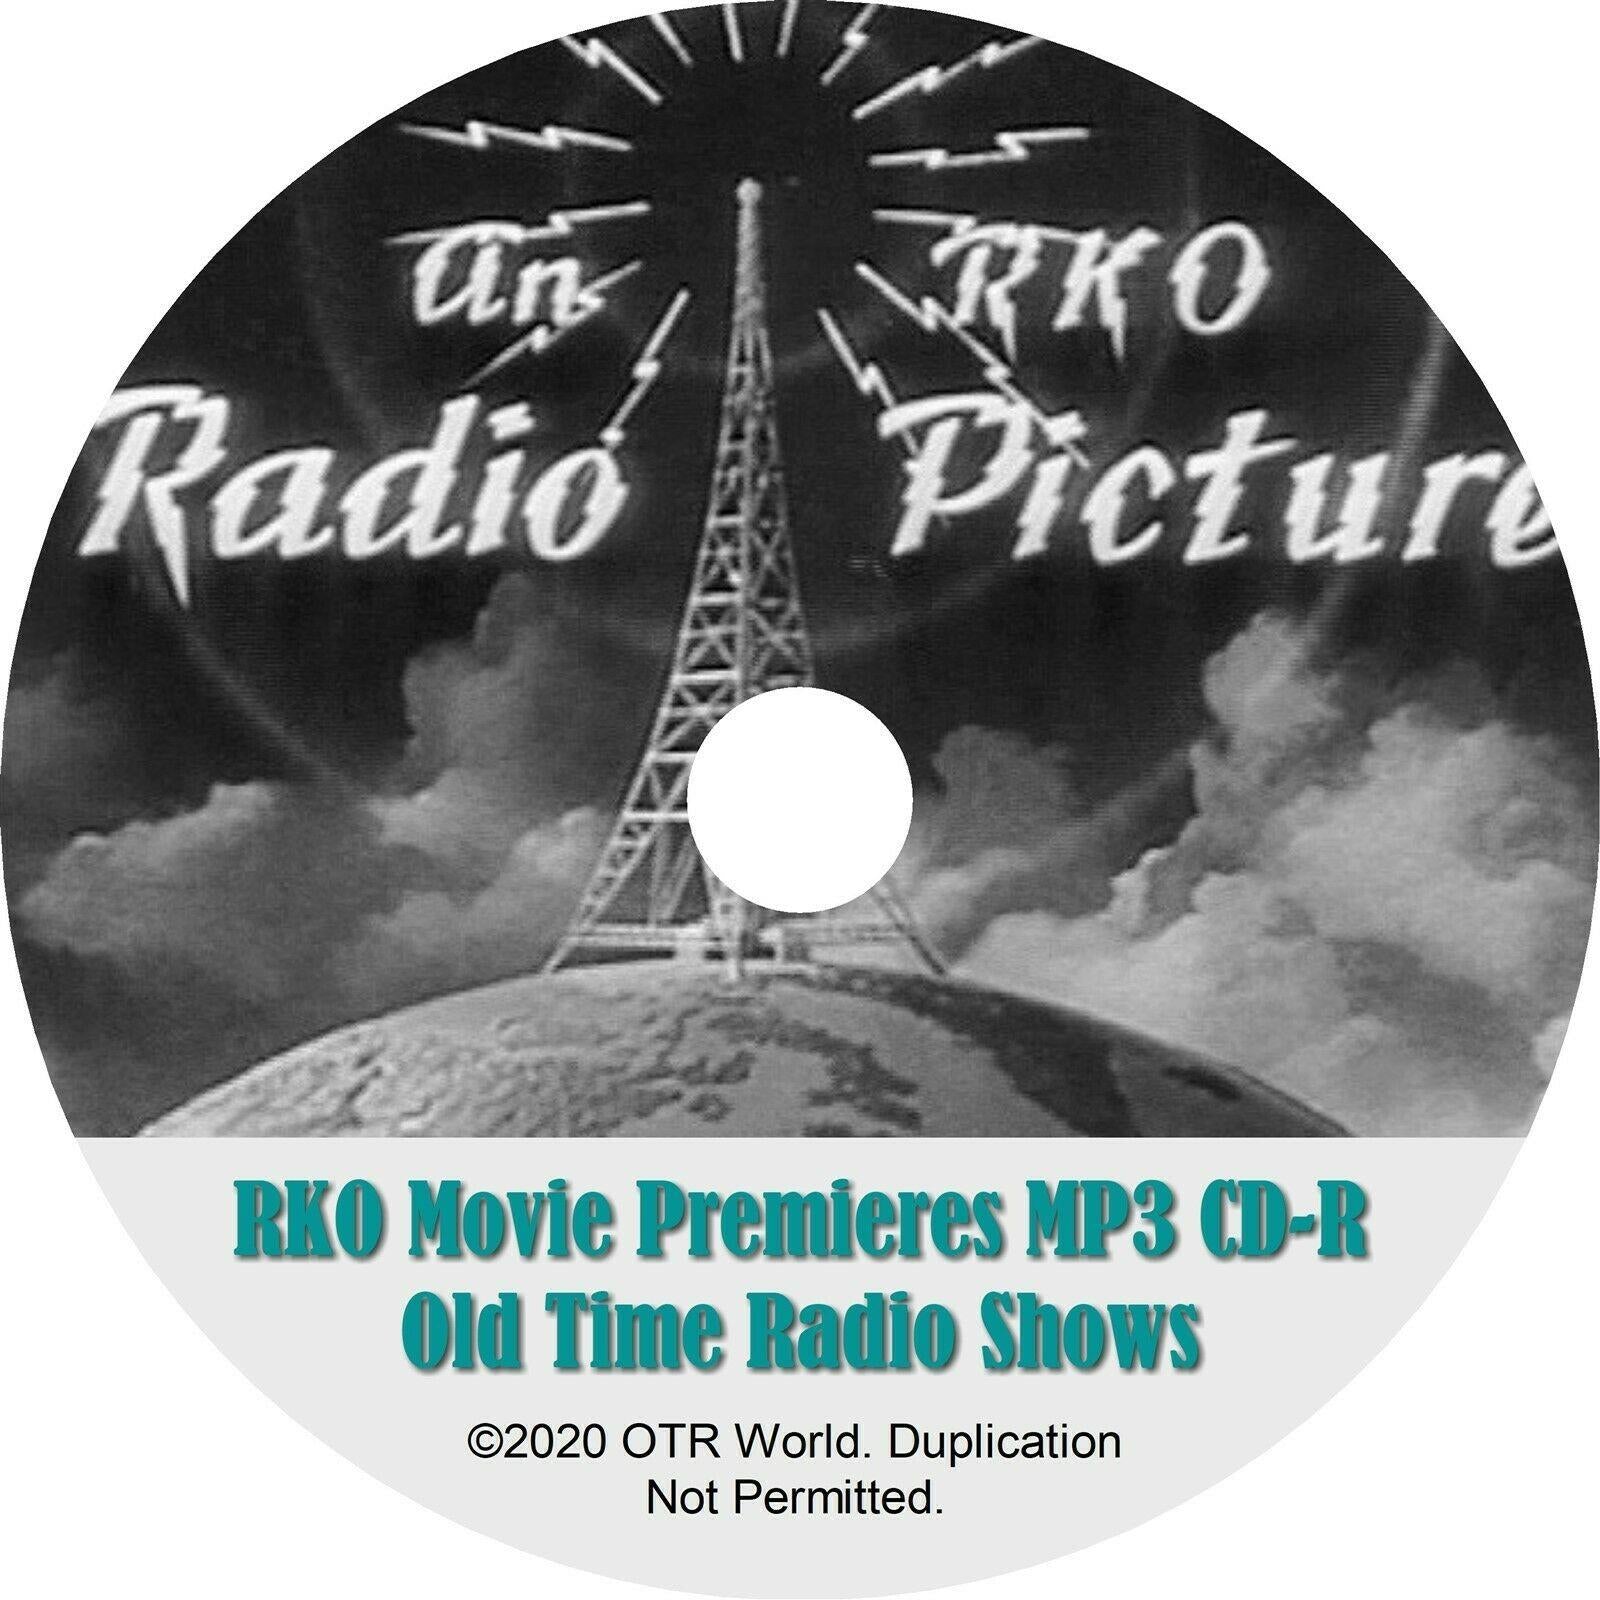 RKO Movie Premieres OTR Old Time Radio Shows MP3 On CD-R 6 Episodes